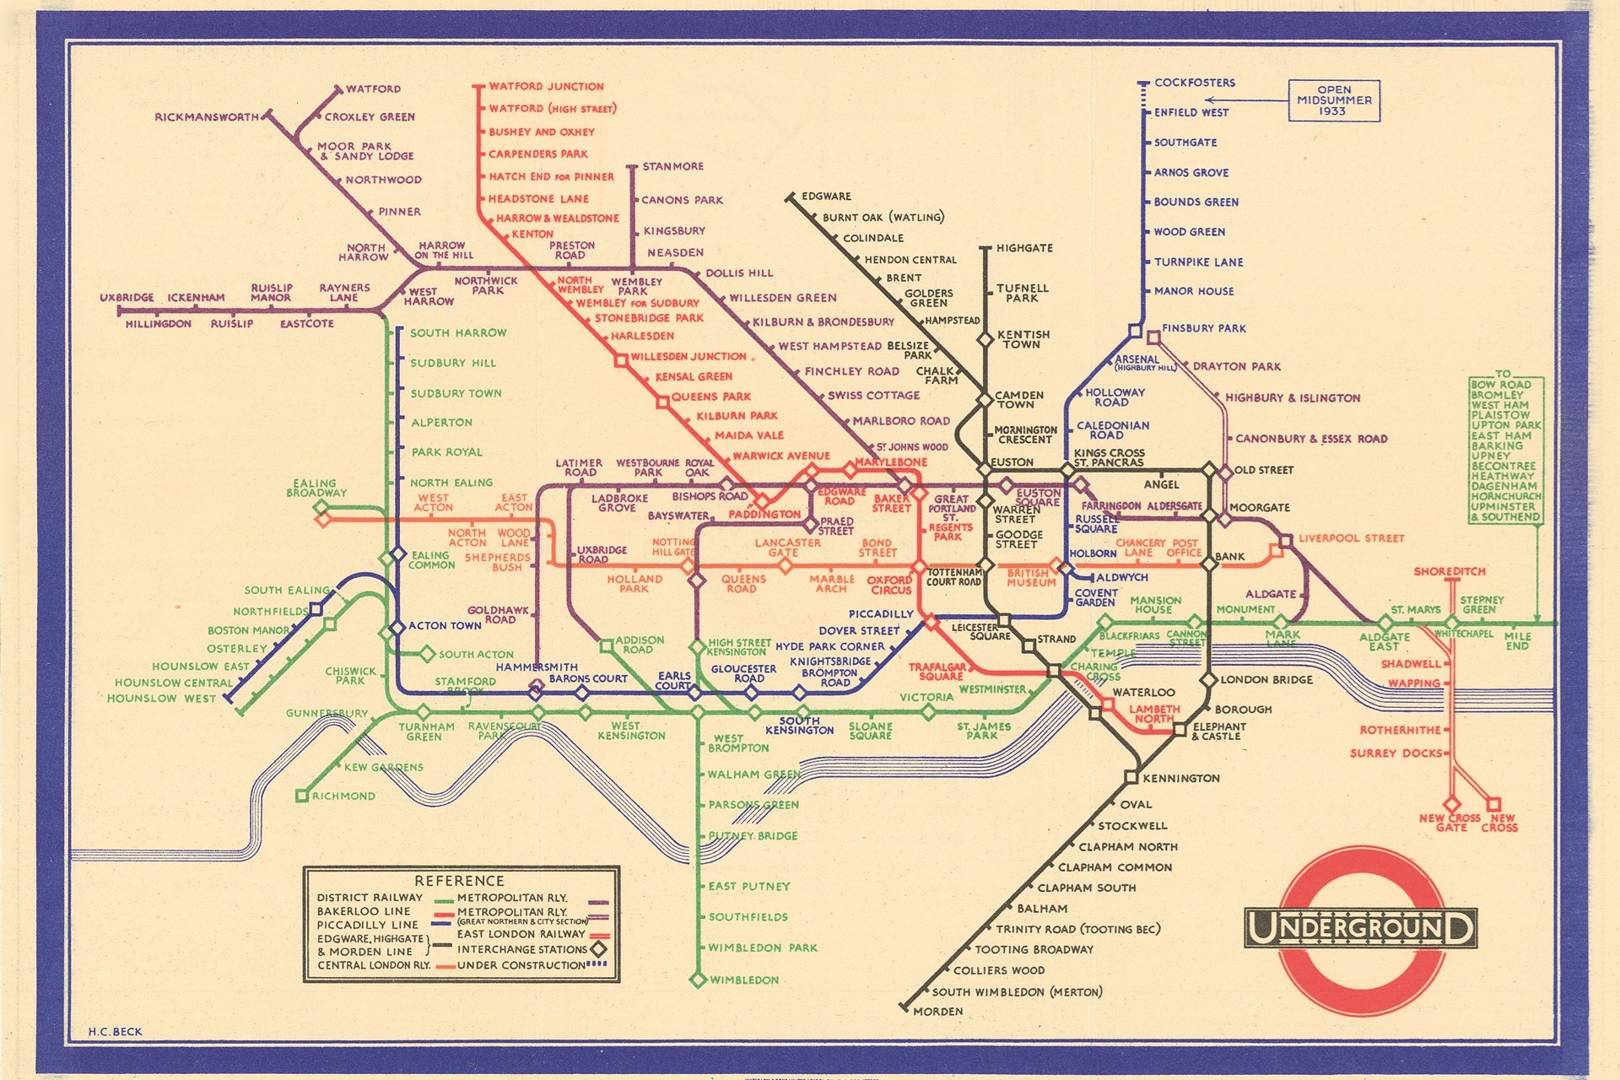 Harry Beck's London Underground map of 1933